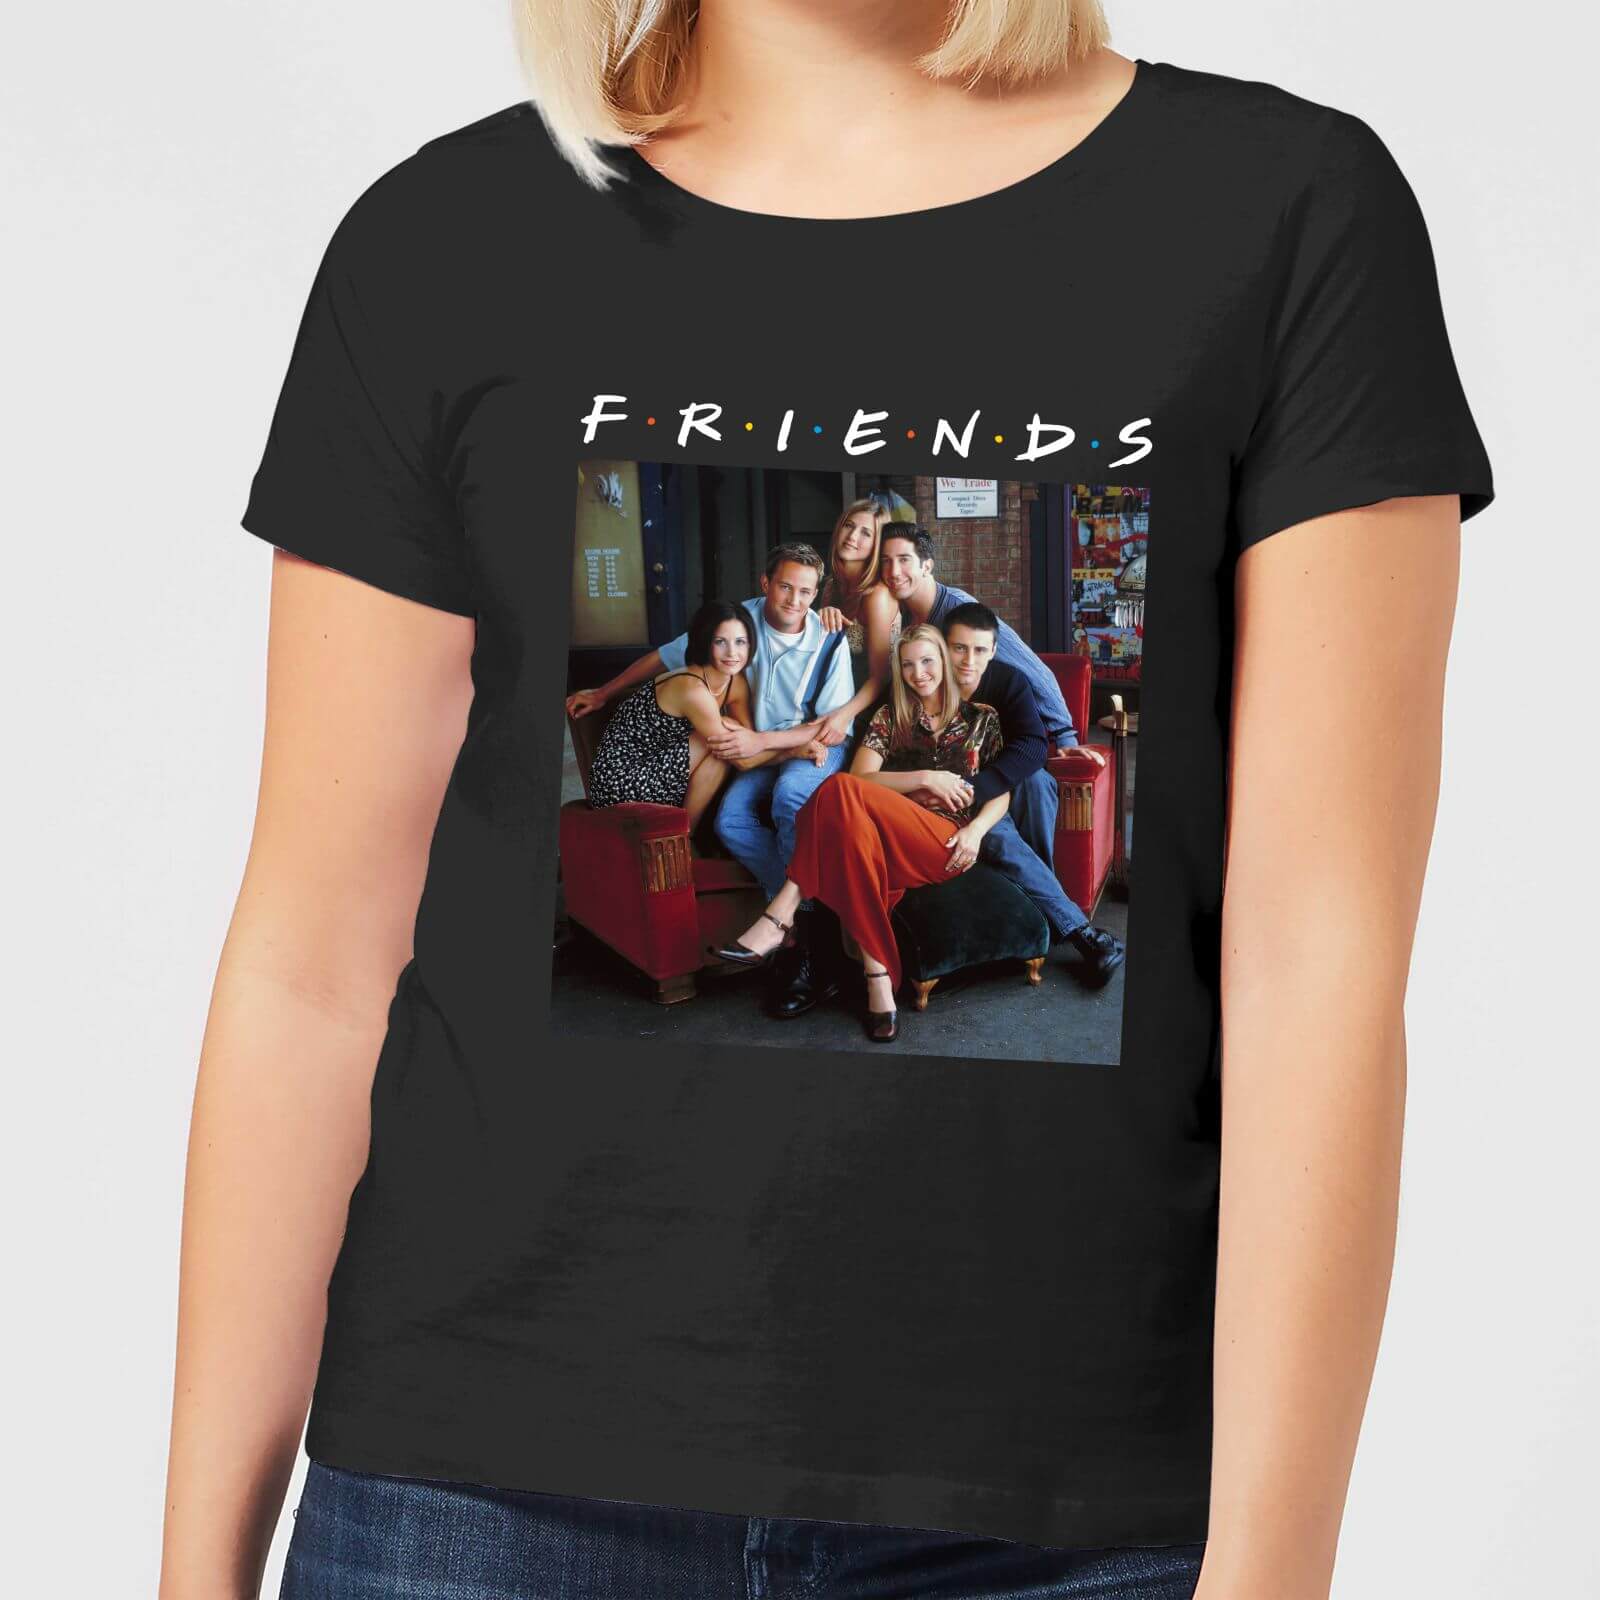 Friends classic character women's t-shirt - black - m